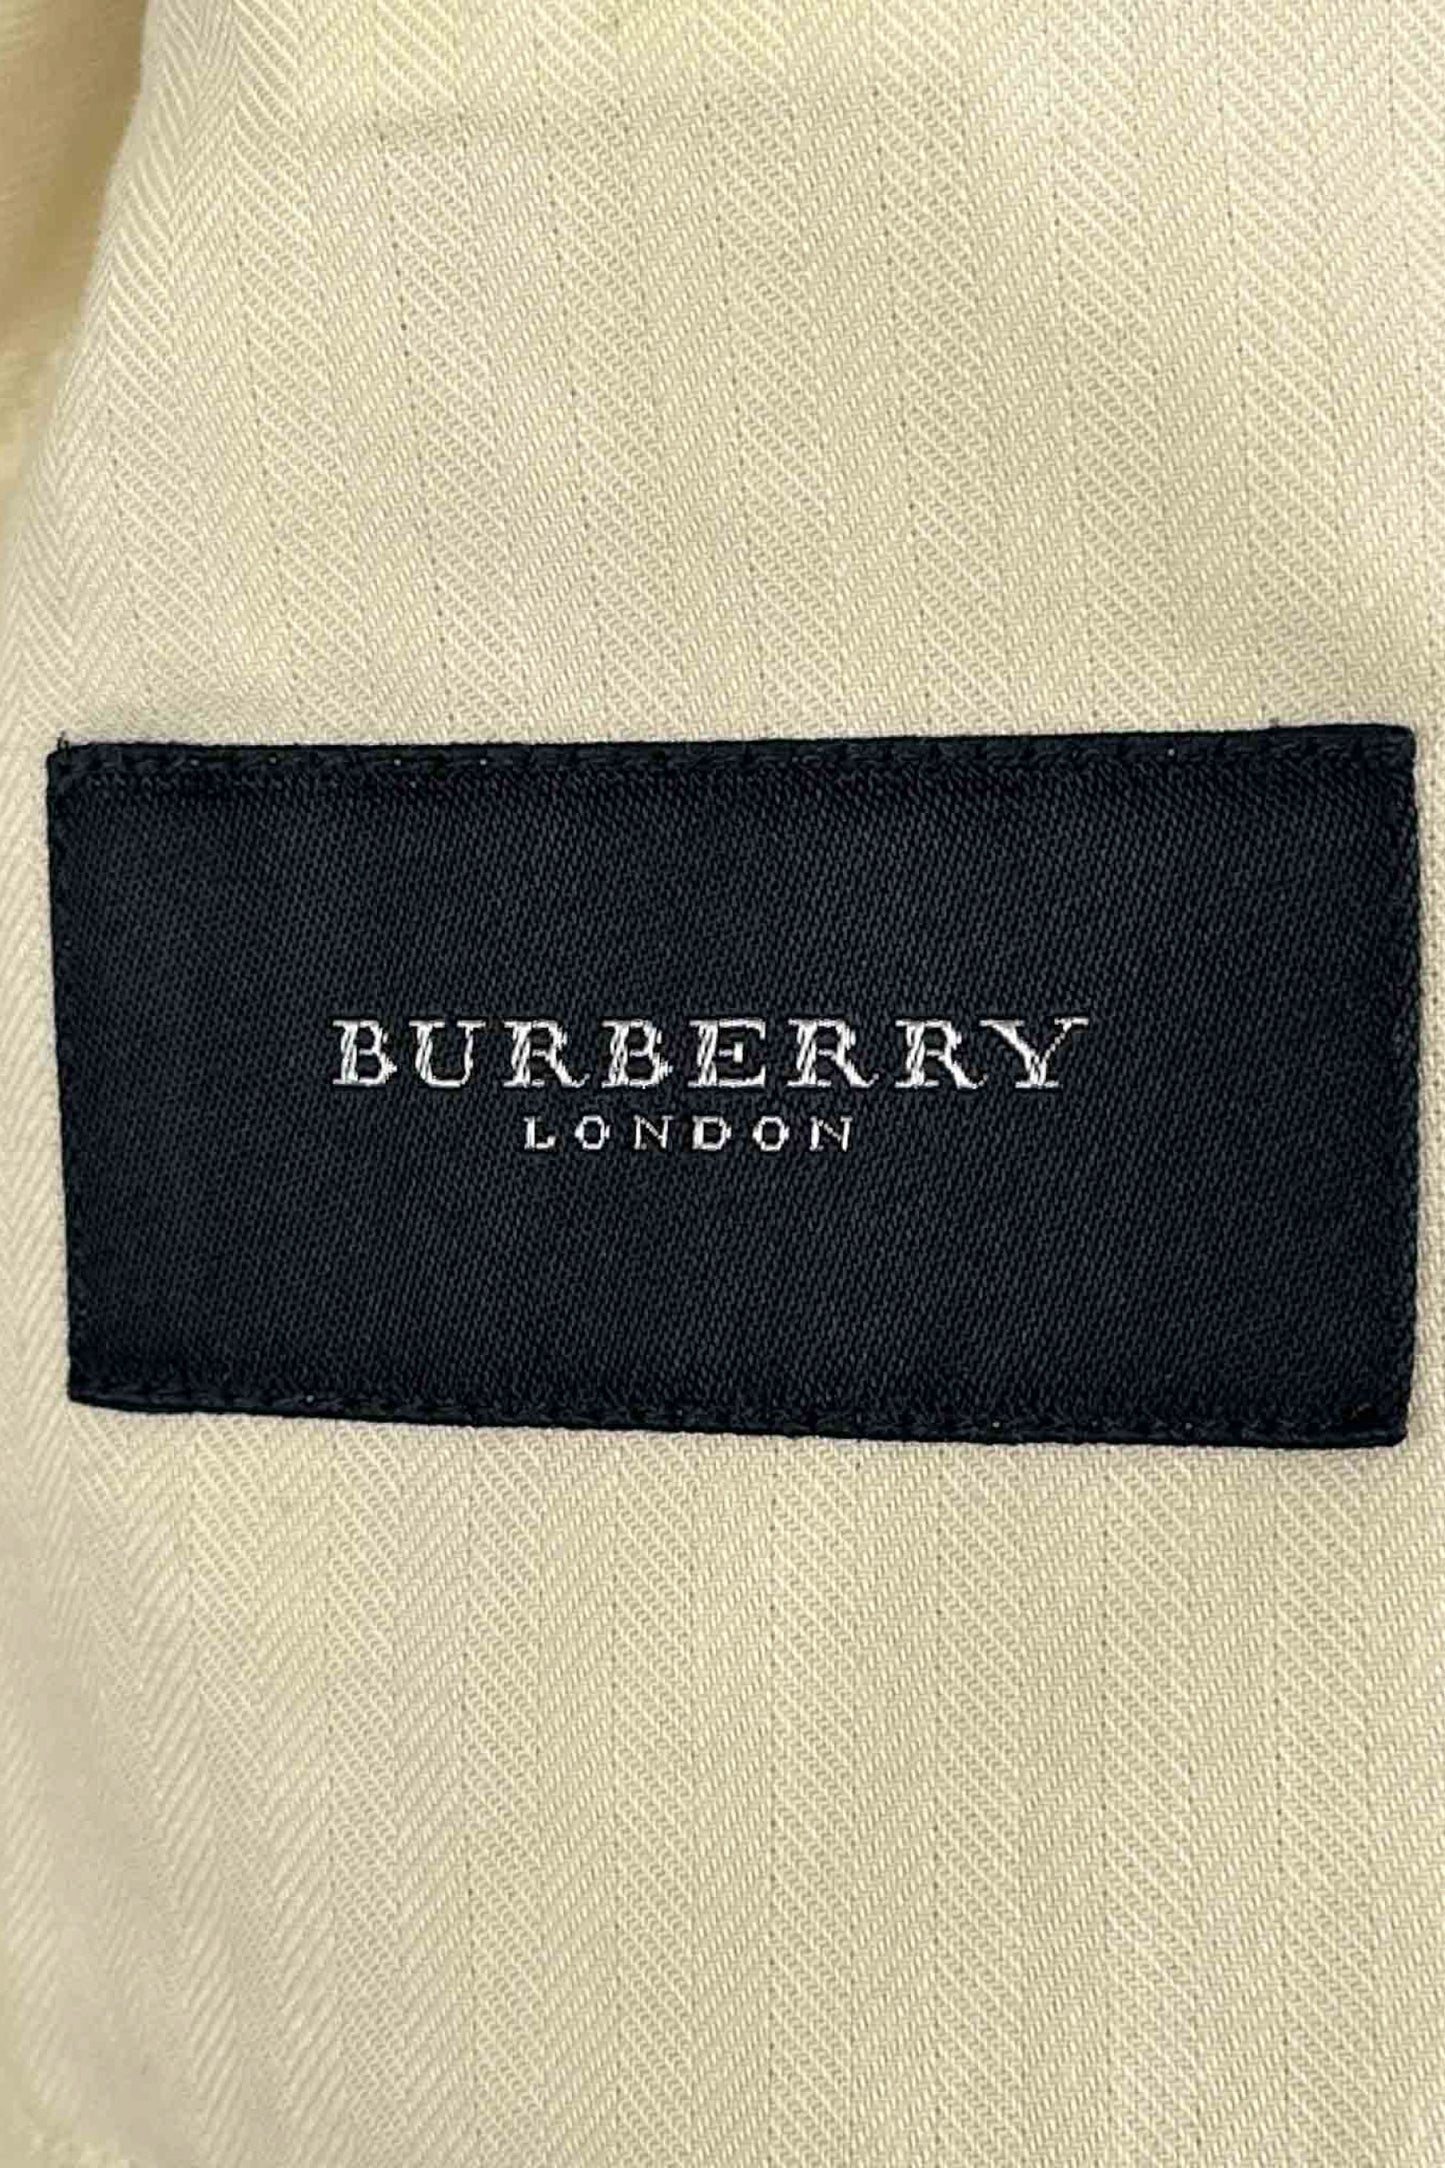 BURBERRY LONDON white jacket